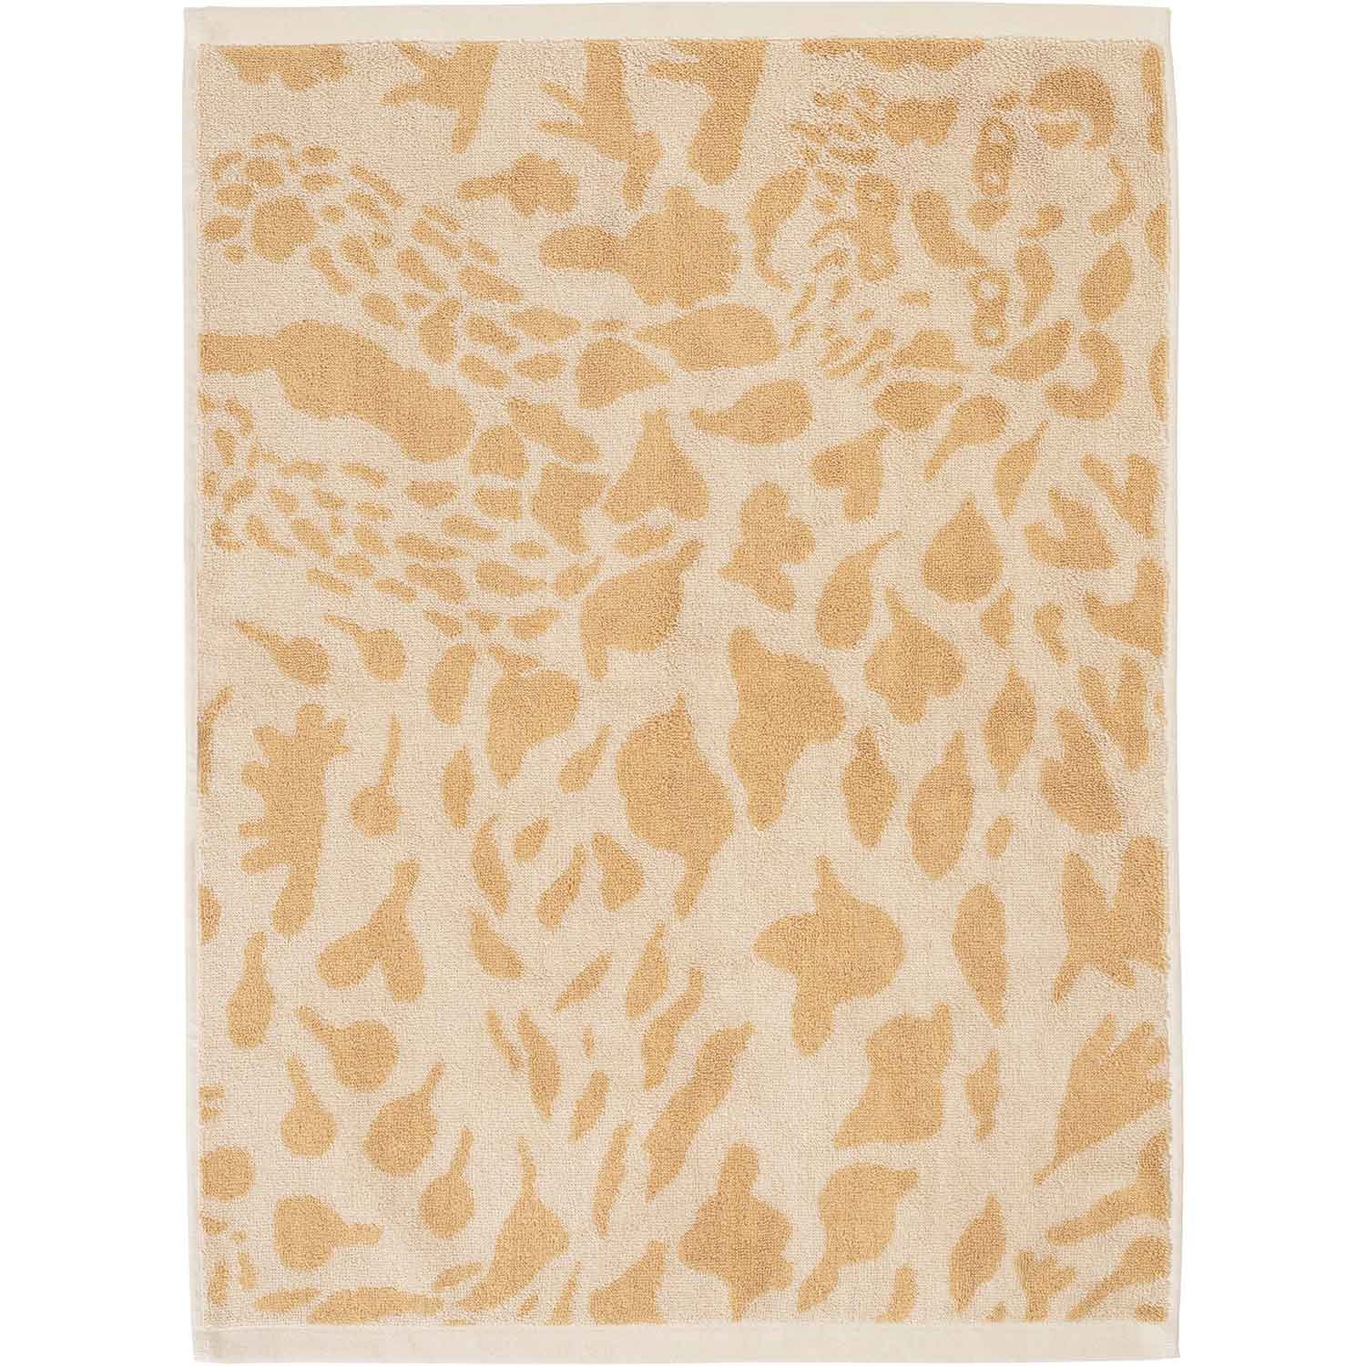 Oiva Toikka Collection Handtuch, 50x70 cm, Cheetah Brown